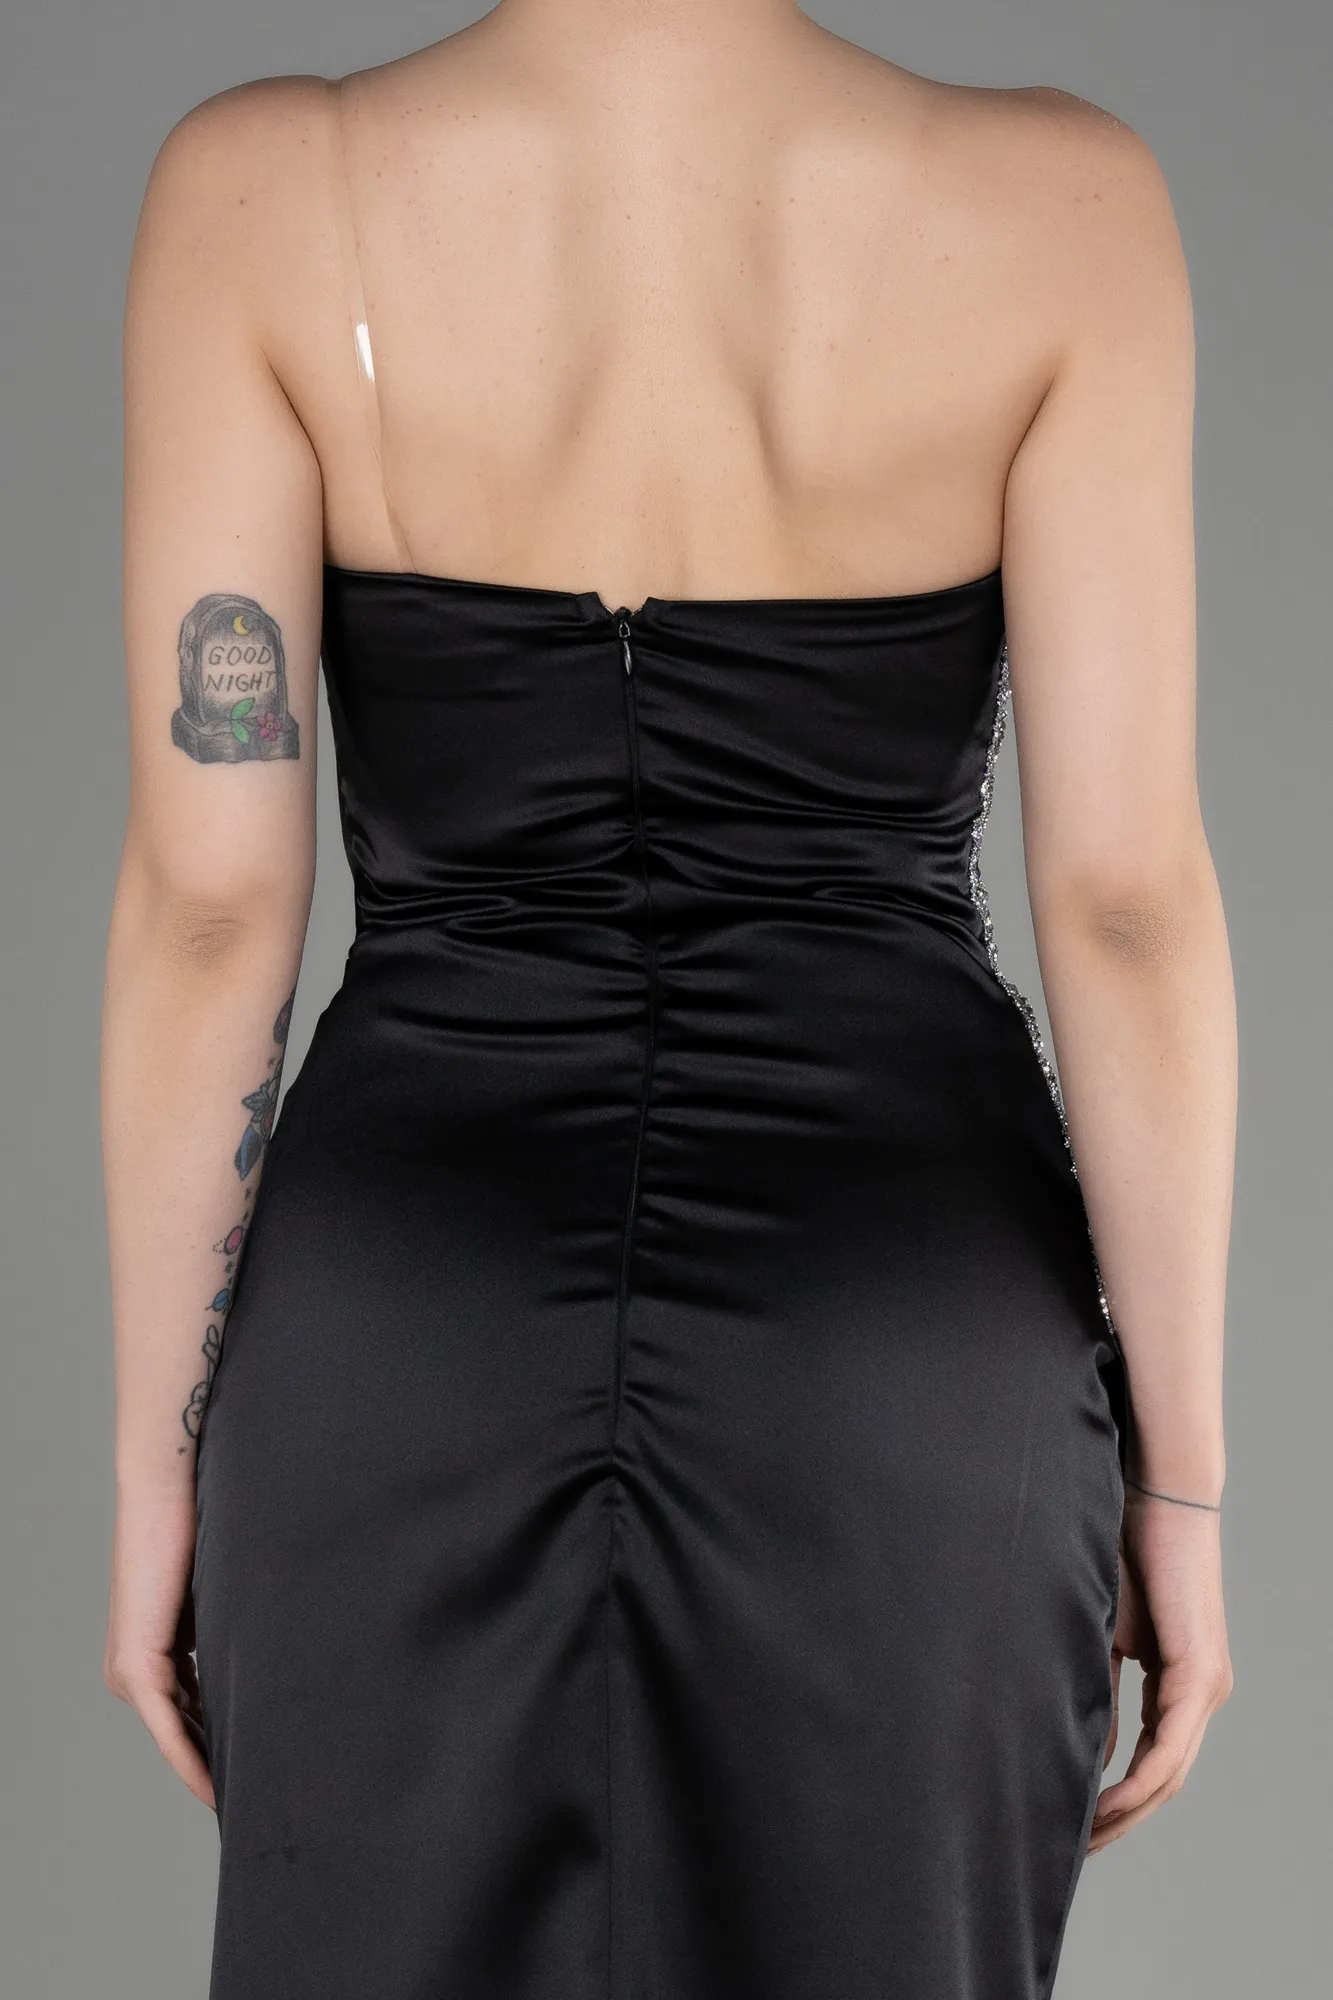 Black-Strapless Long Satin Evening Dress ABU3825